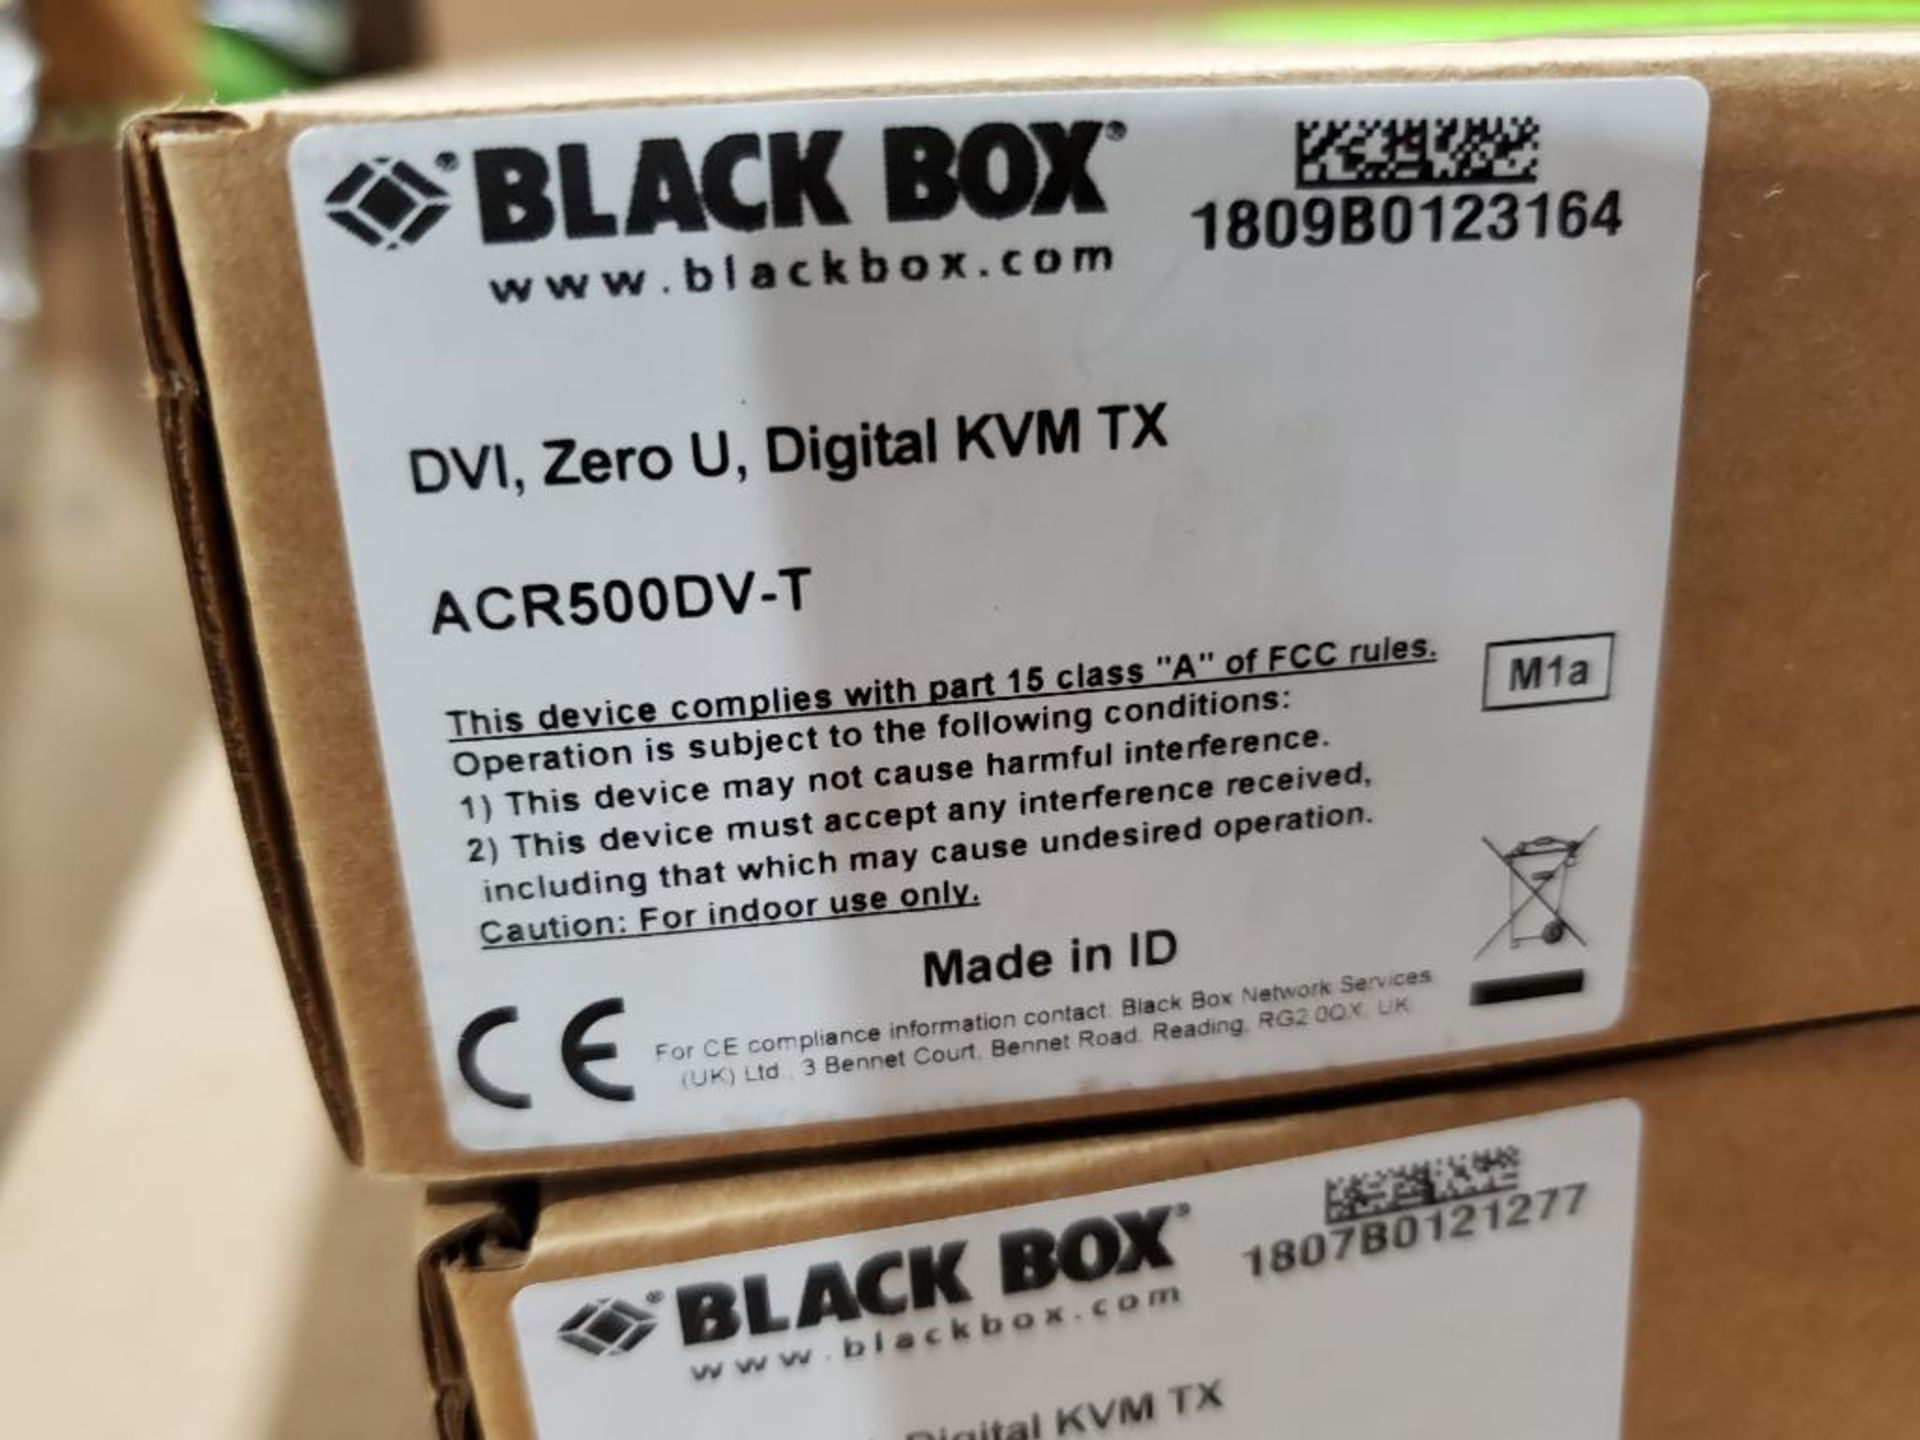 Qty 2 - Black Box DVI, Zero U, Digital KVM TX. Part number ACR500DV-T. - Image 2 of 2